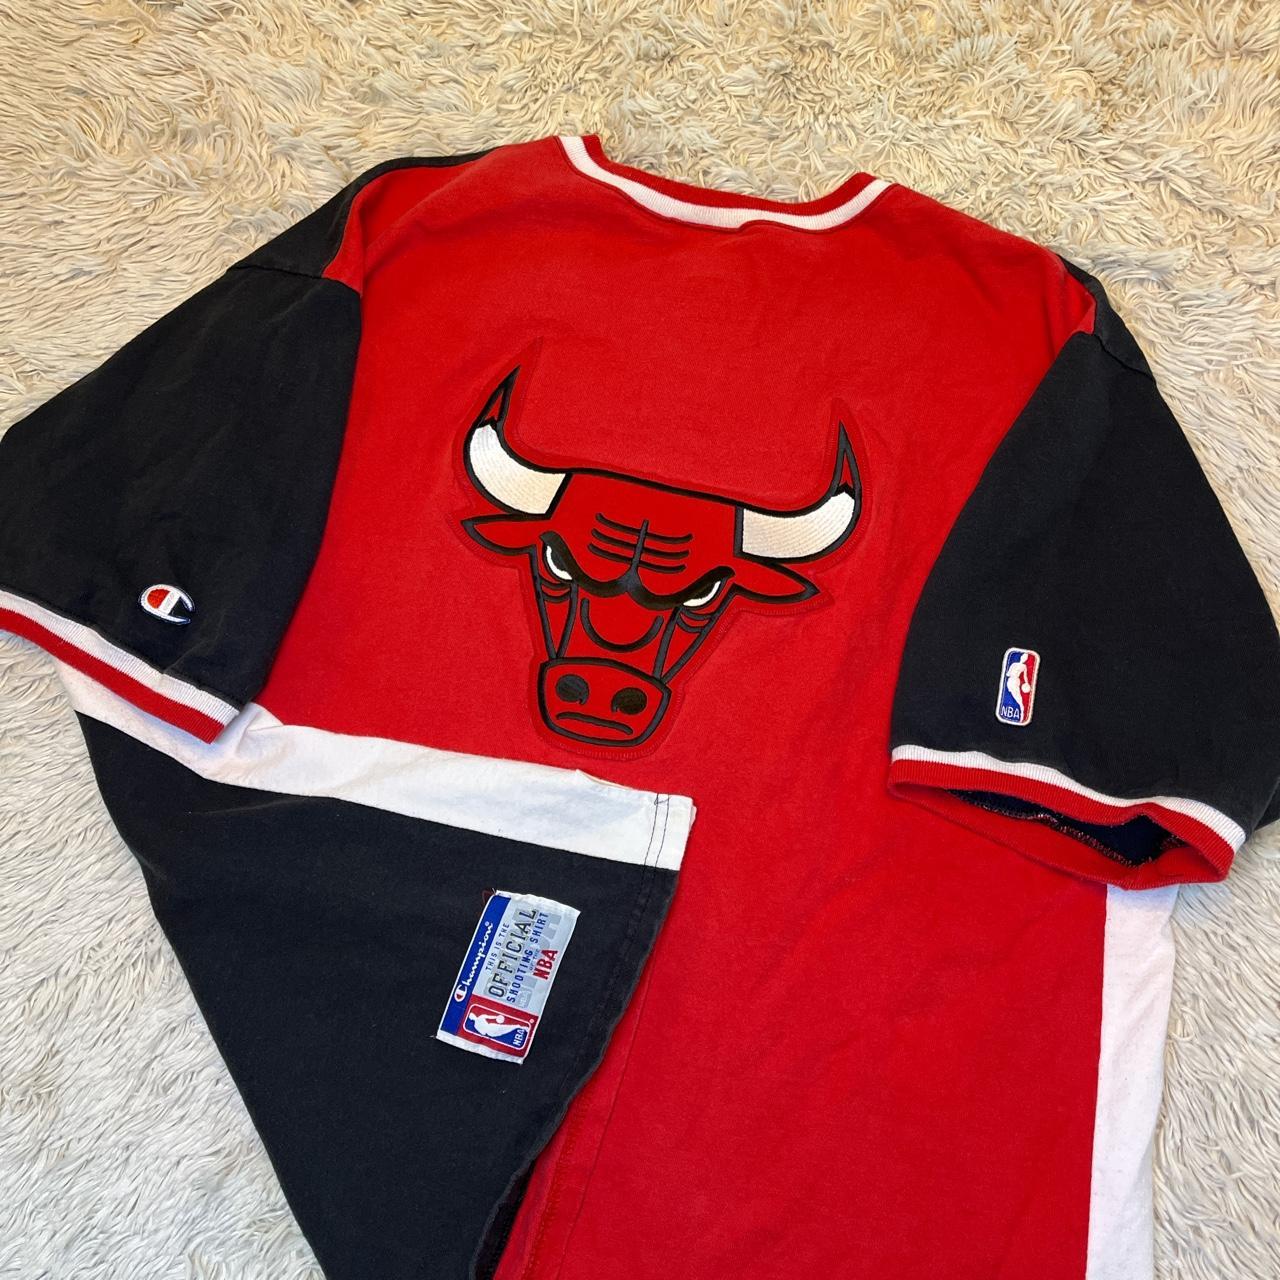 Champion, Shirts, Vintage Chicago Bulls Warm Up Shooting Shirt